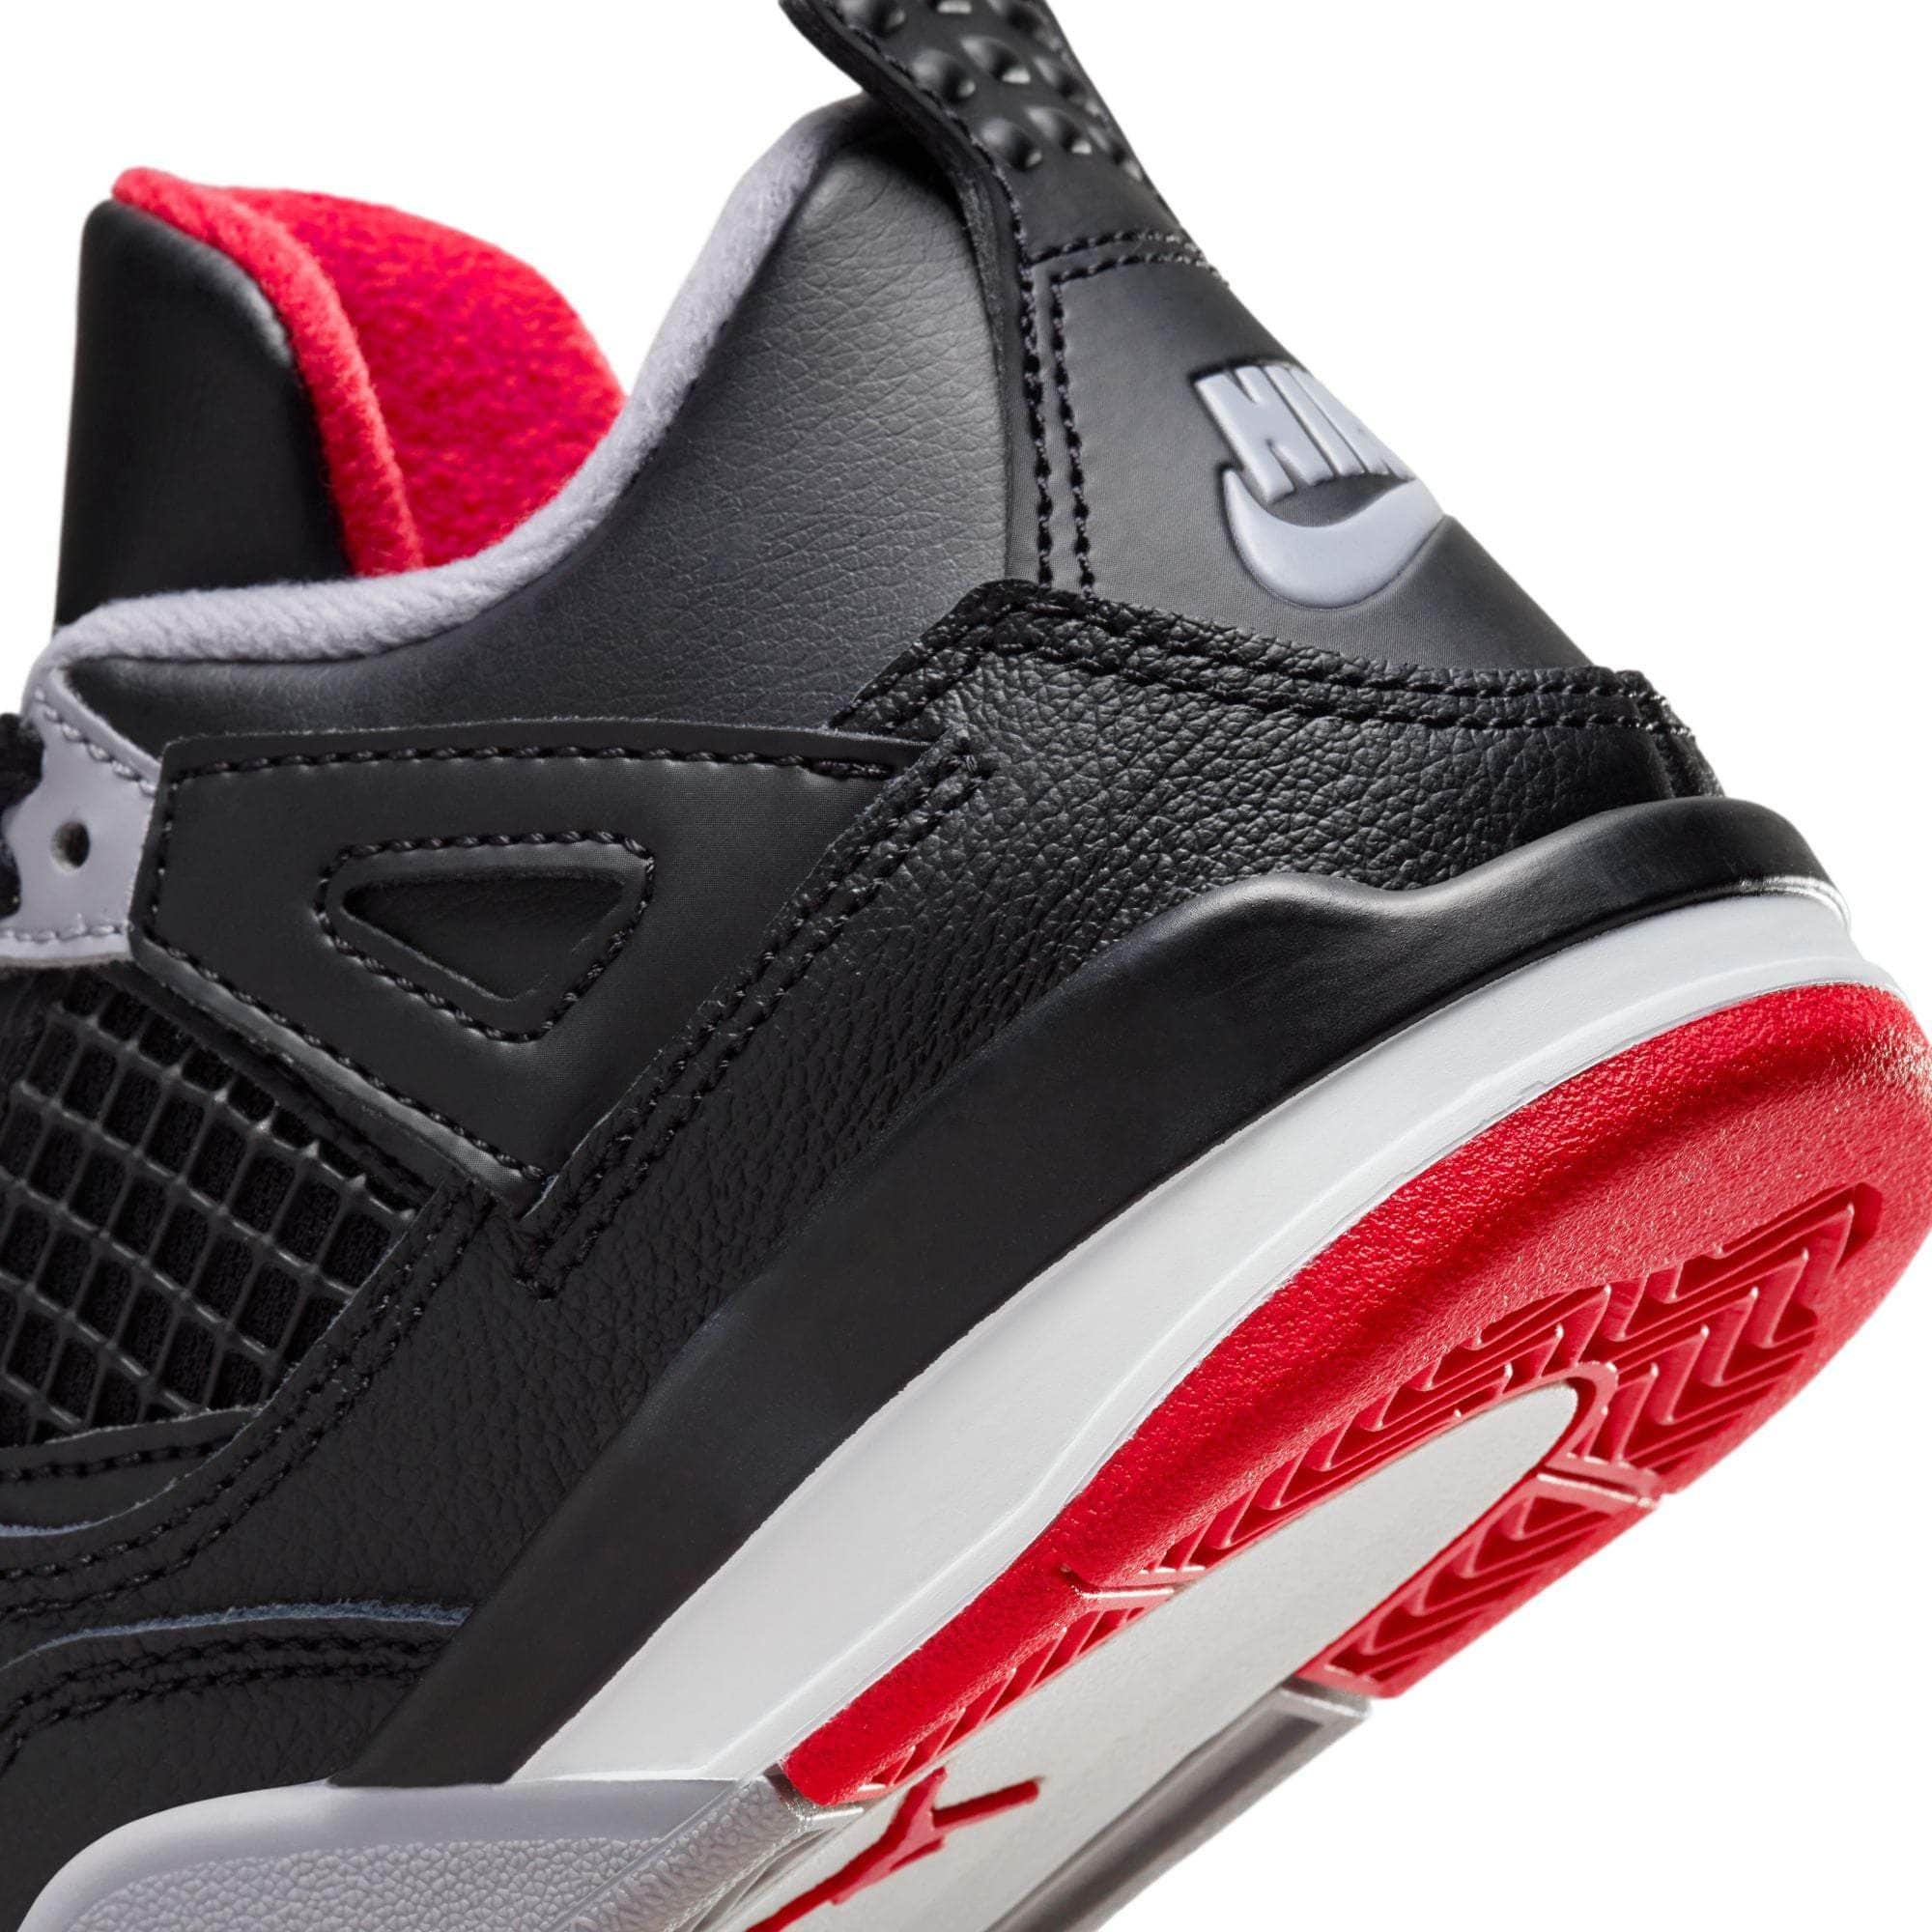 Air Jordan Footwear Air Jordan 4 Retro "Bred Reimagined" - Kids Pre School